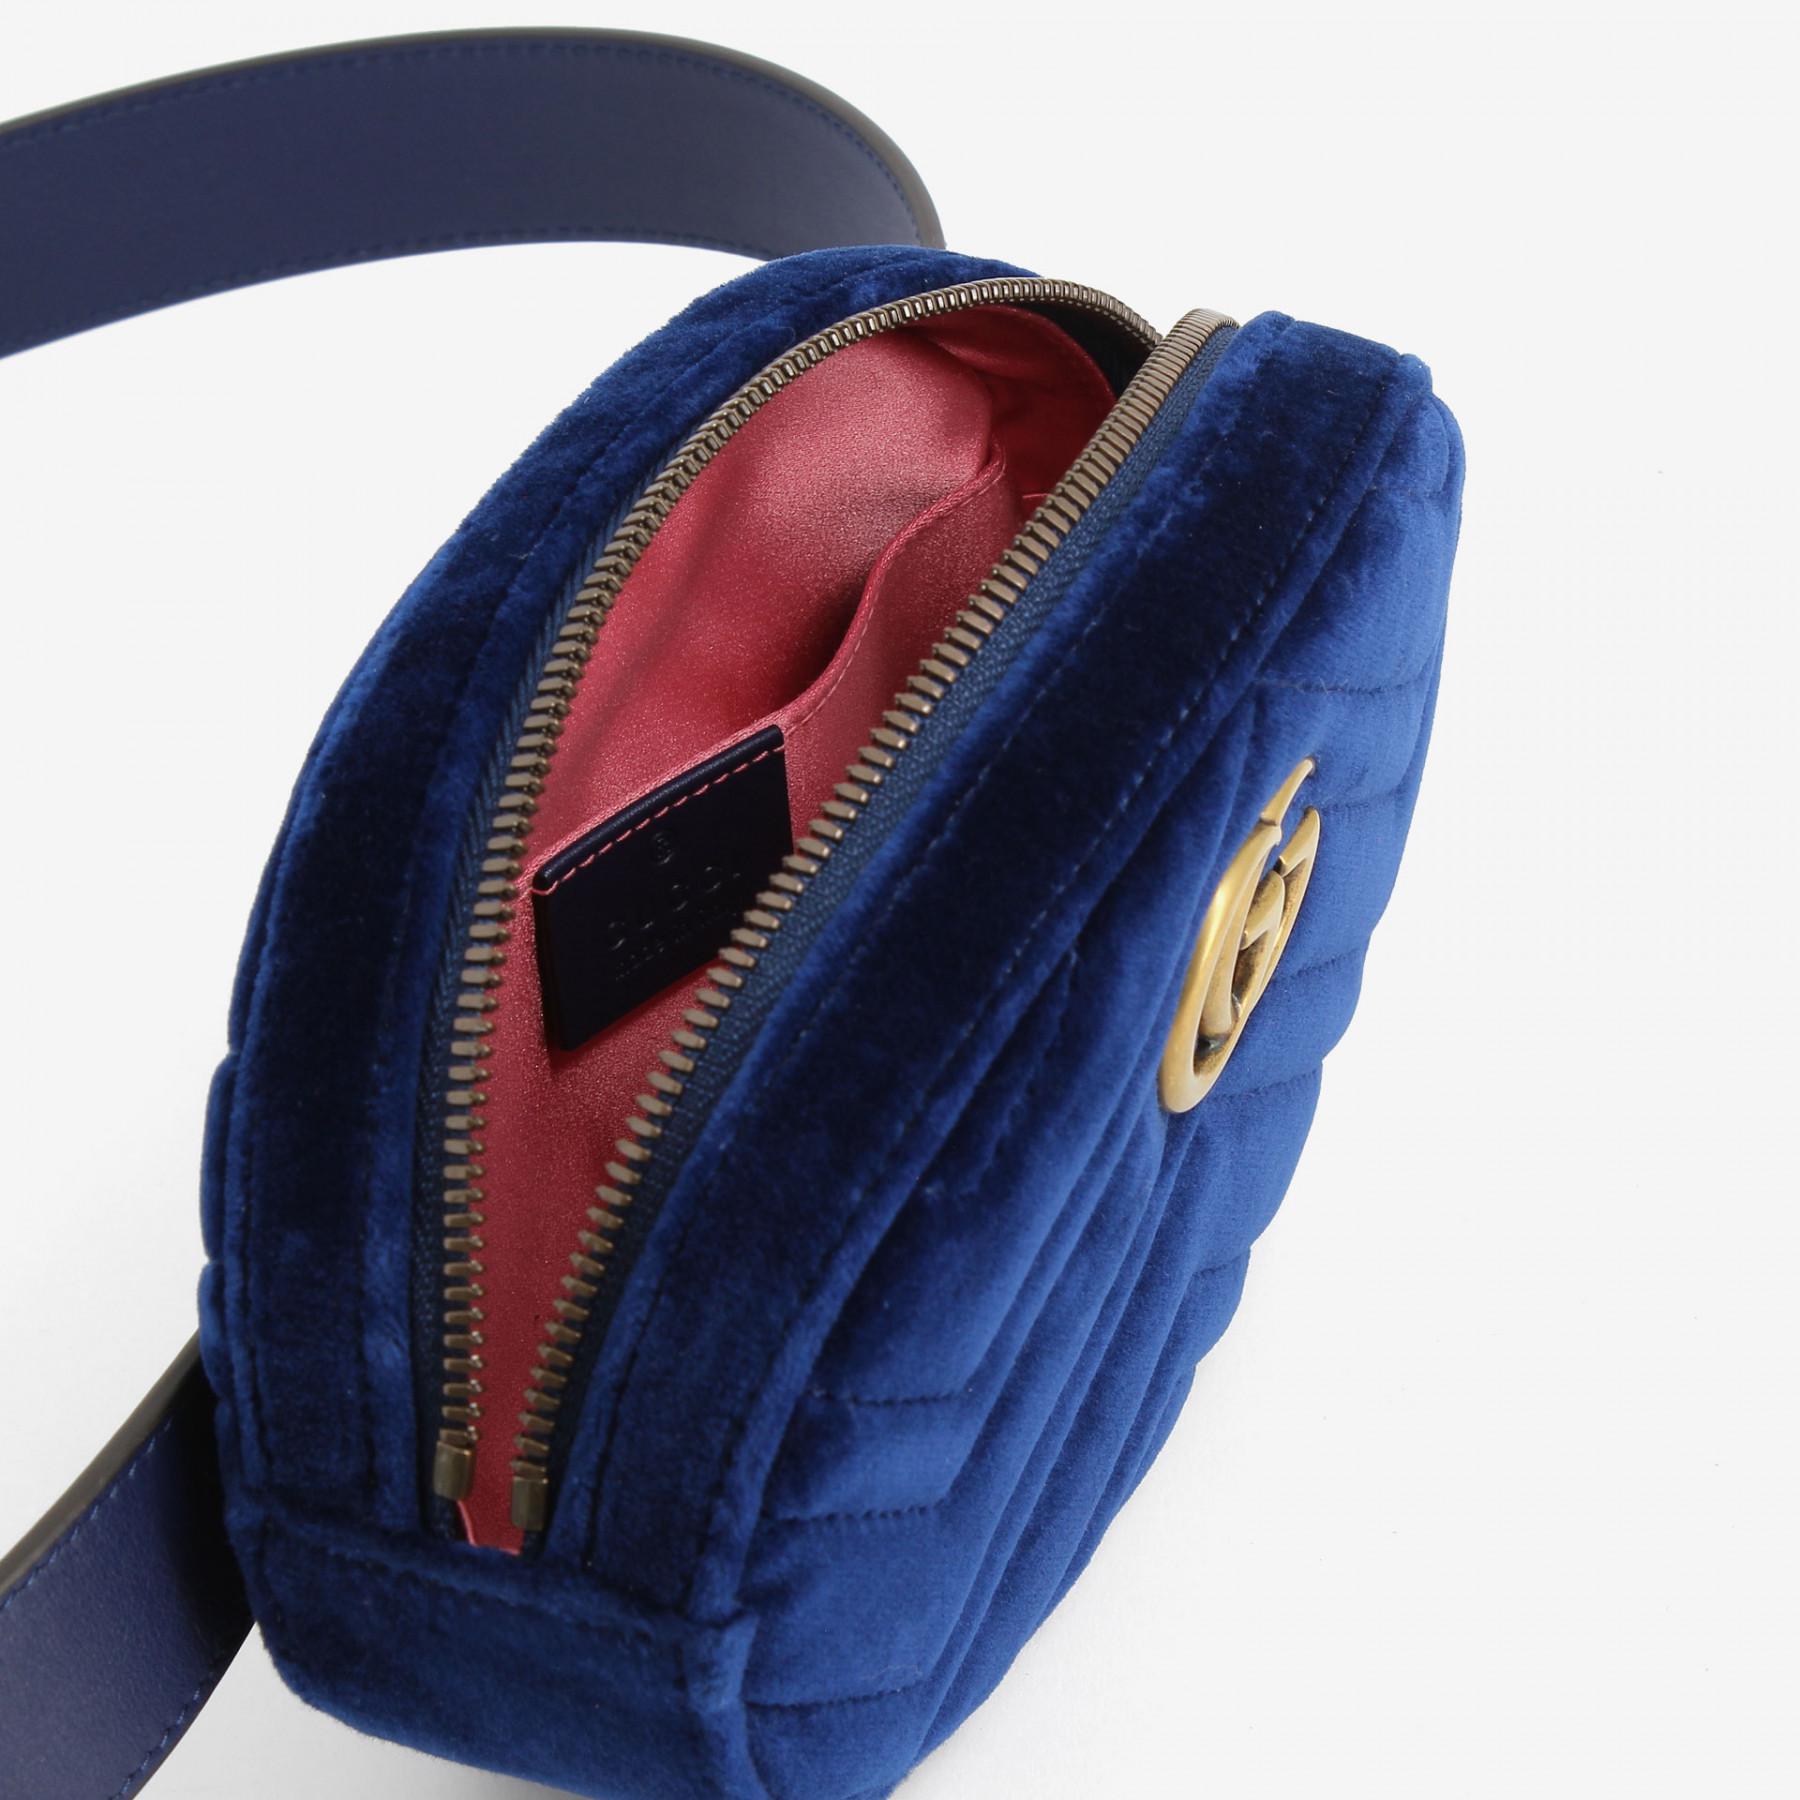 Gucci Velvet Marmont Belt Bag in Navy (Blue) - Lyst